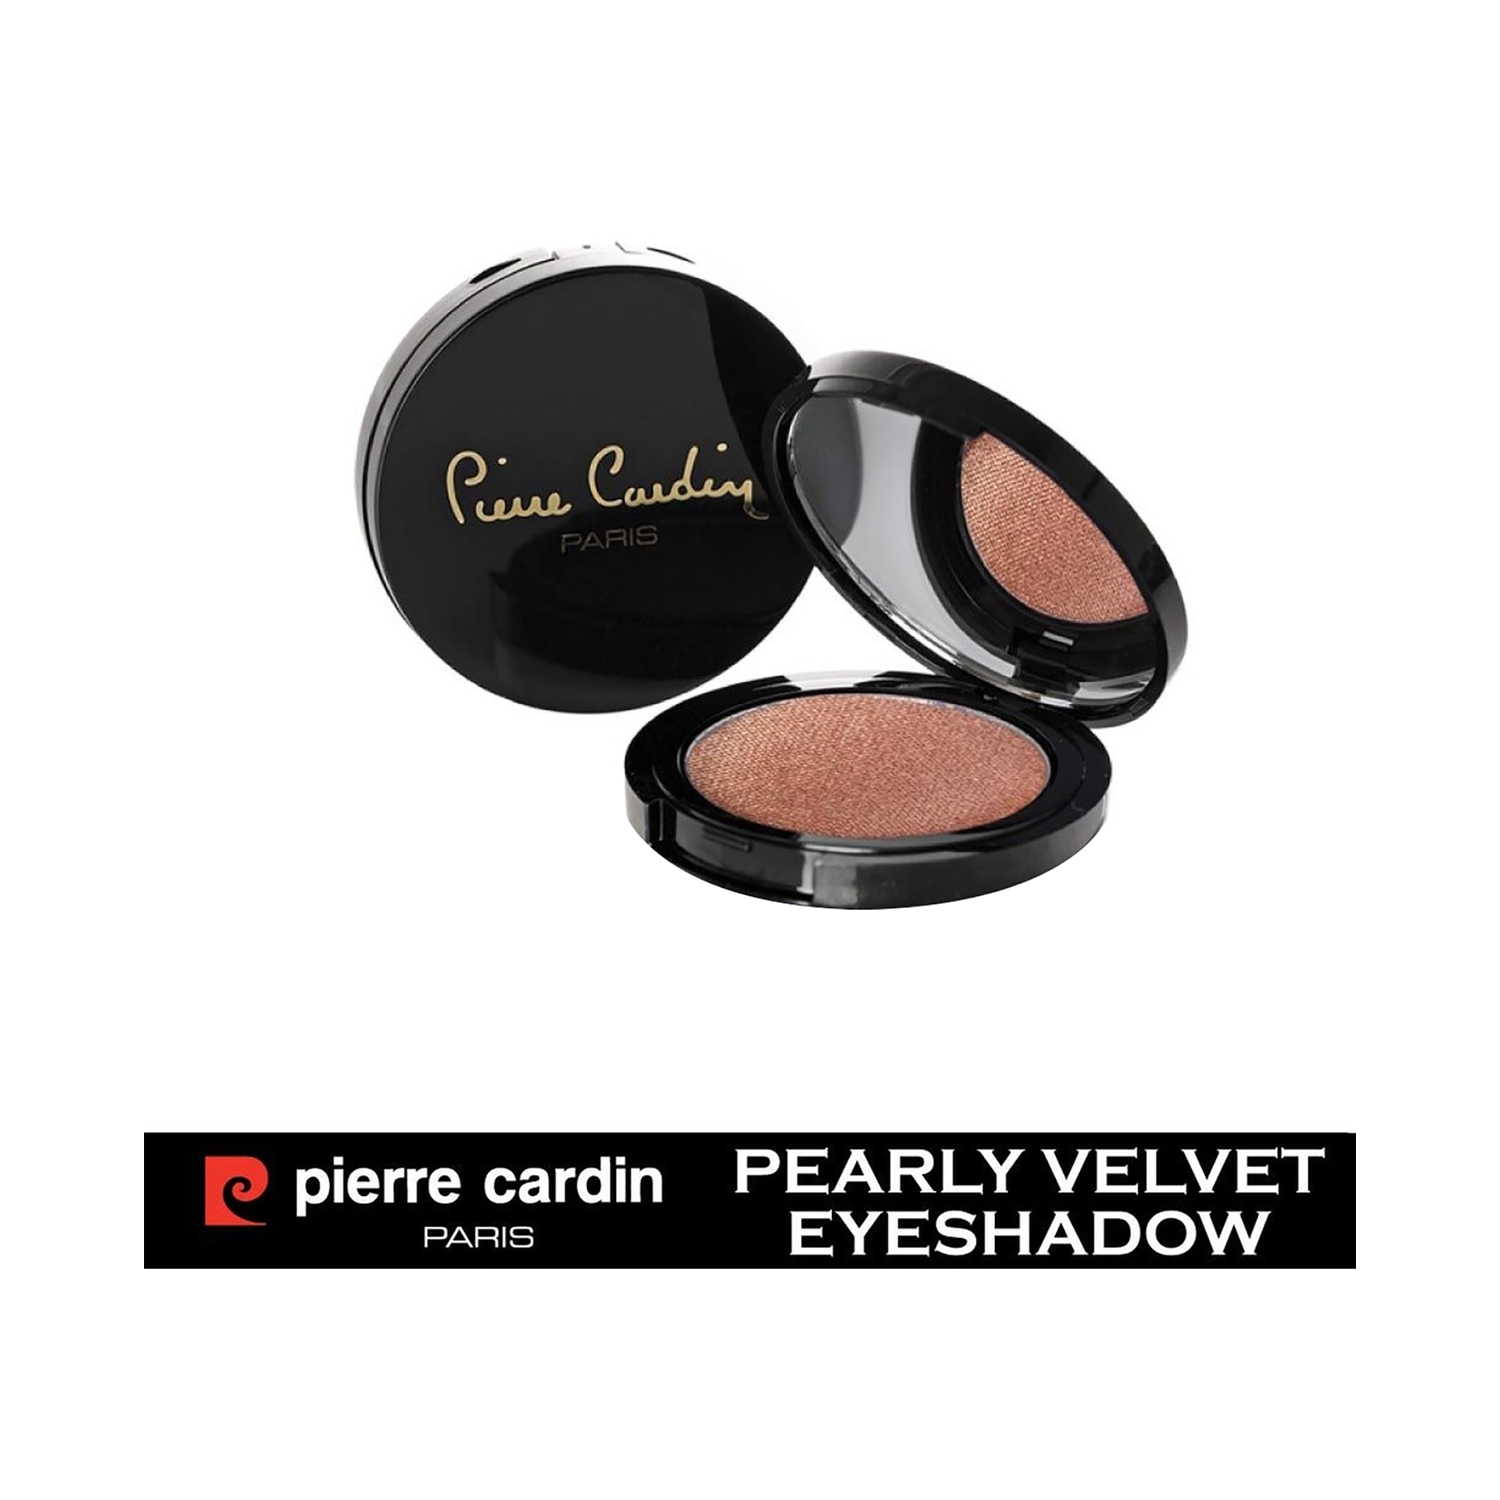 Pierre Cardin Paris | Pierre Cardin Paris Pearly Velvet Eye Shadow - 875 Tangerine (4g)